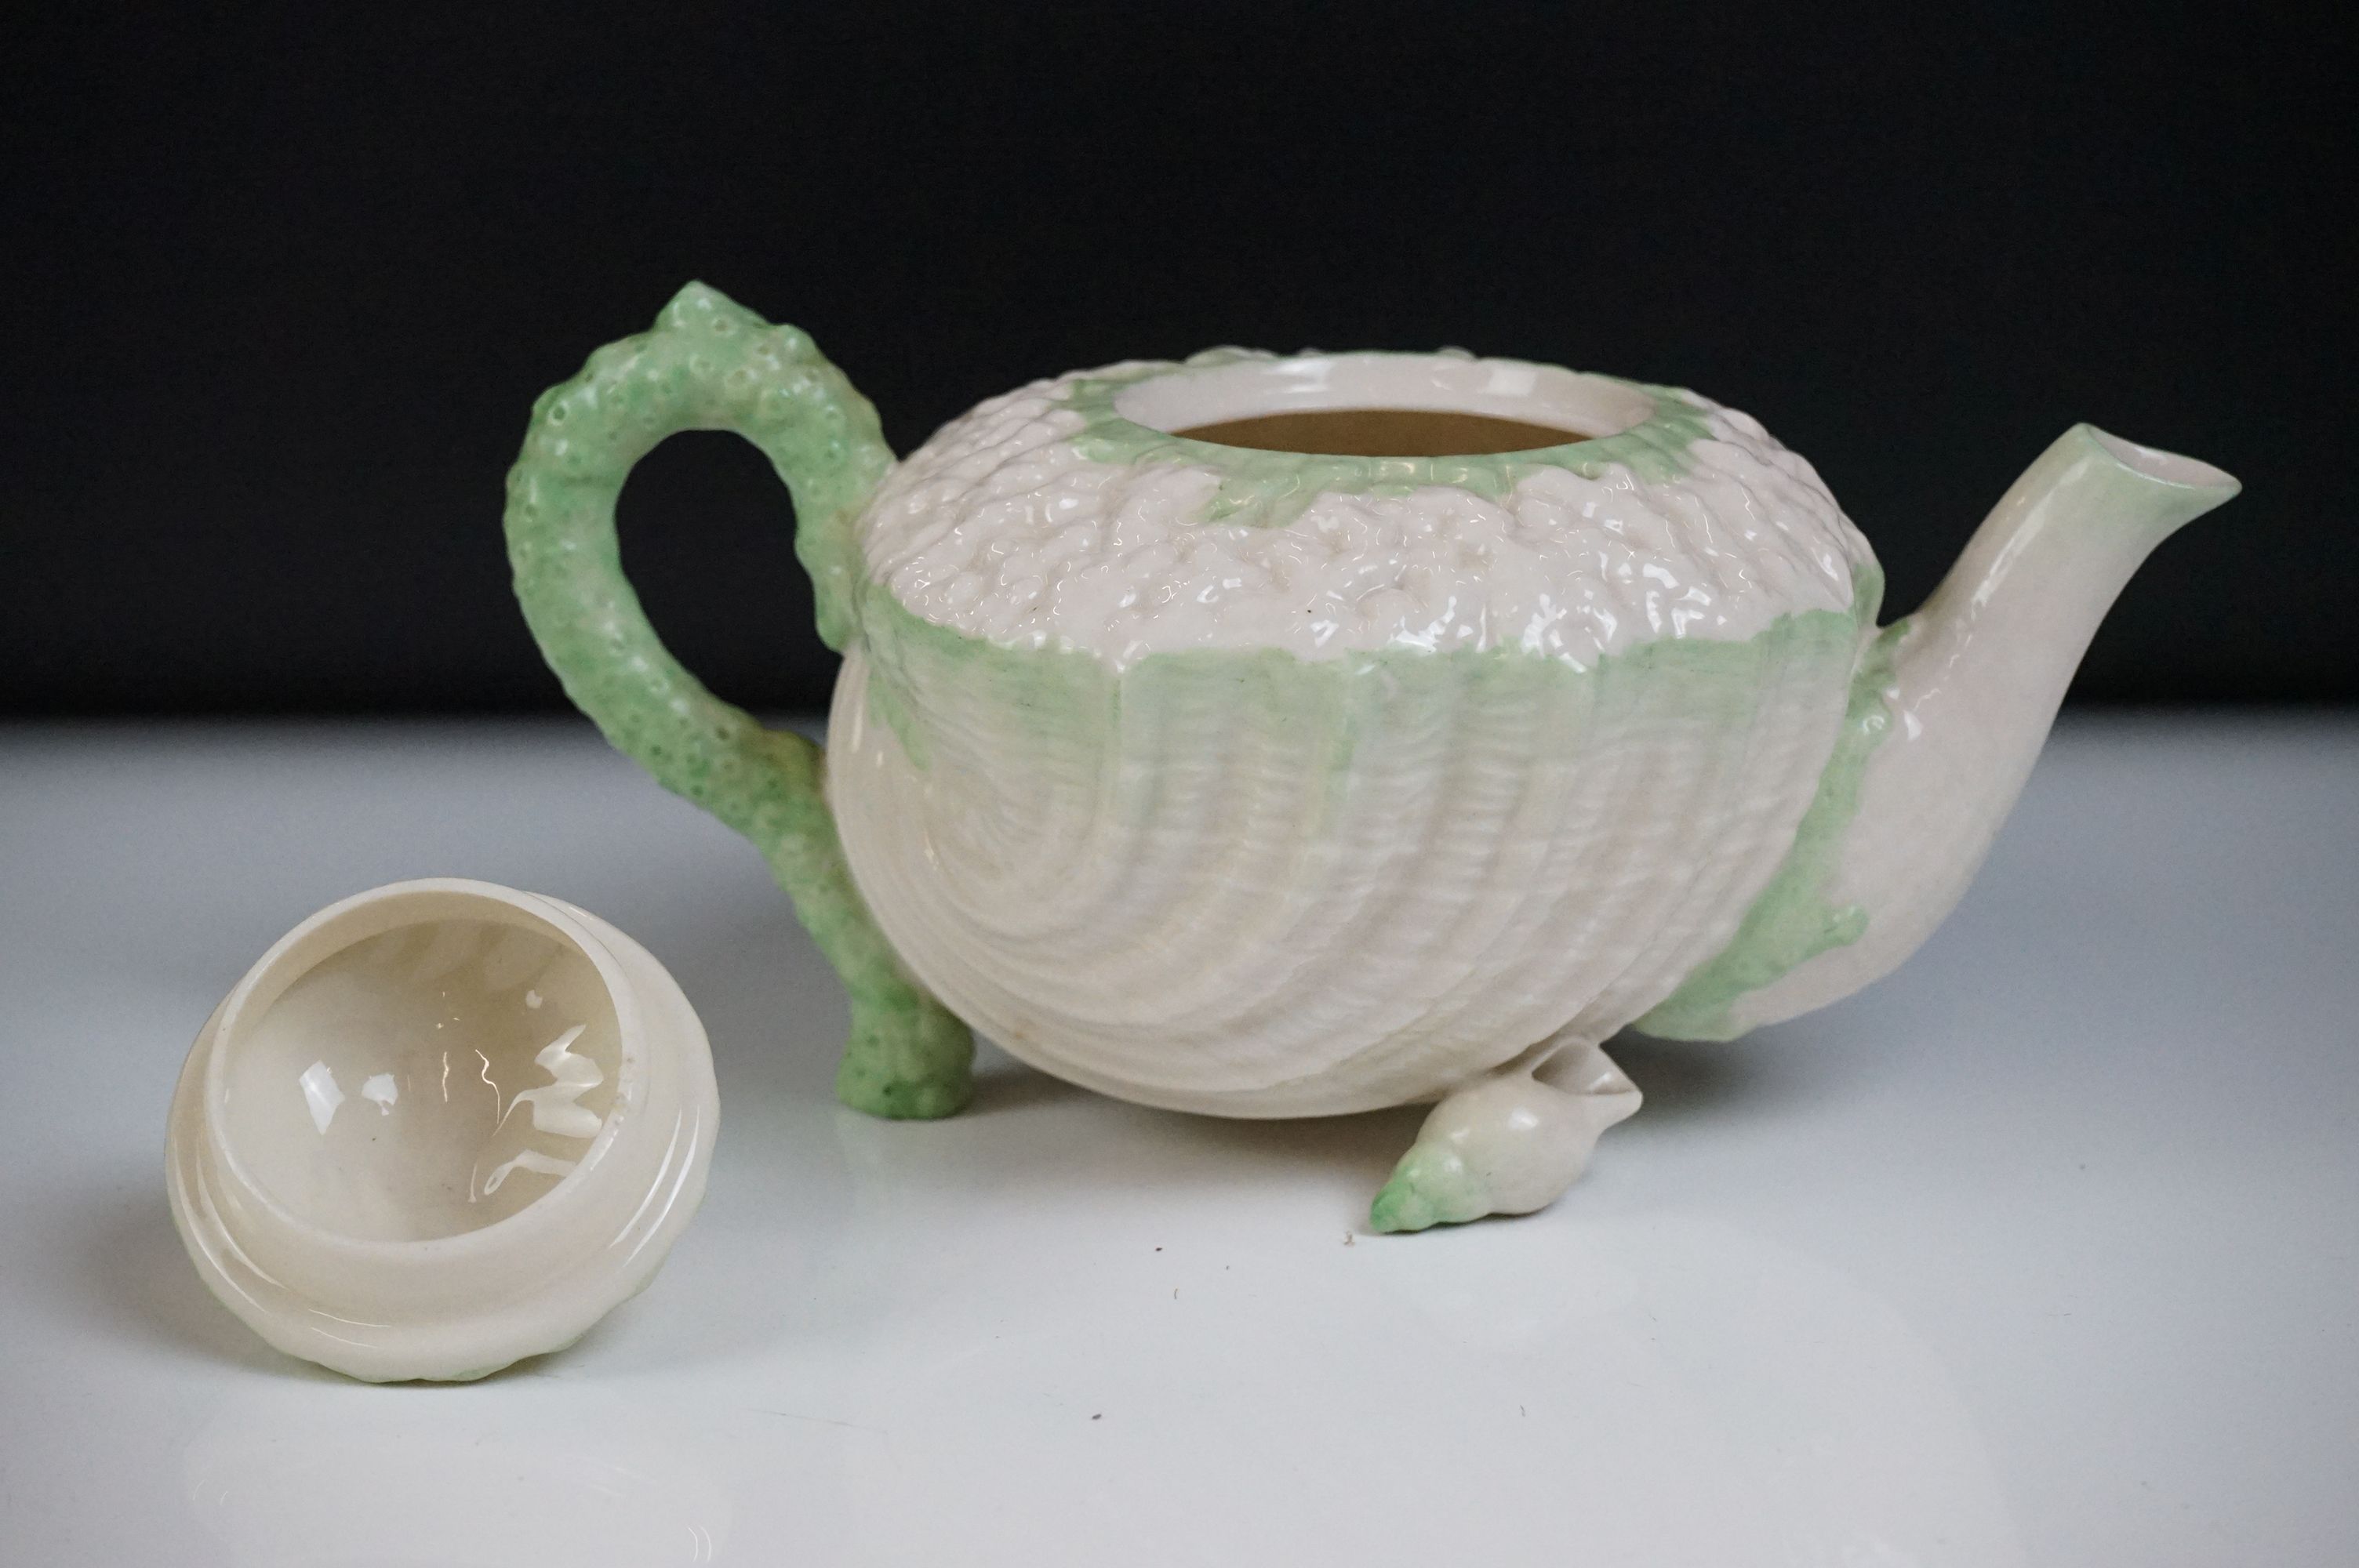 Belleek porcelain tea ware comprising Green Neptune pattern (teapot & cover and milk jug), 2 teacups - Image 11 of 15